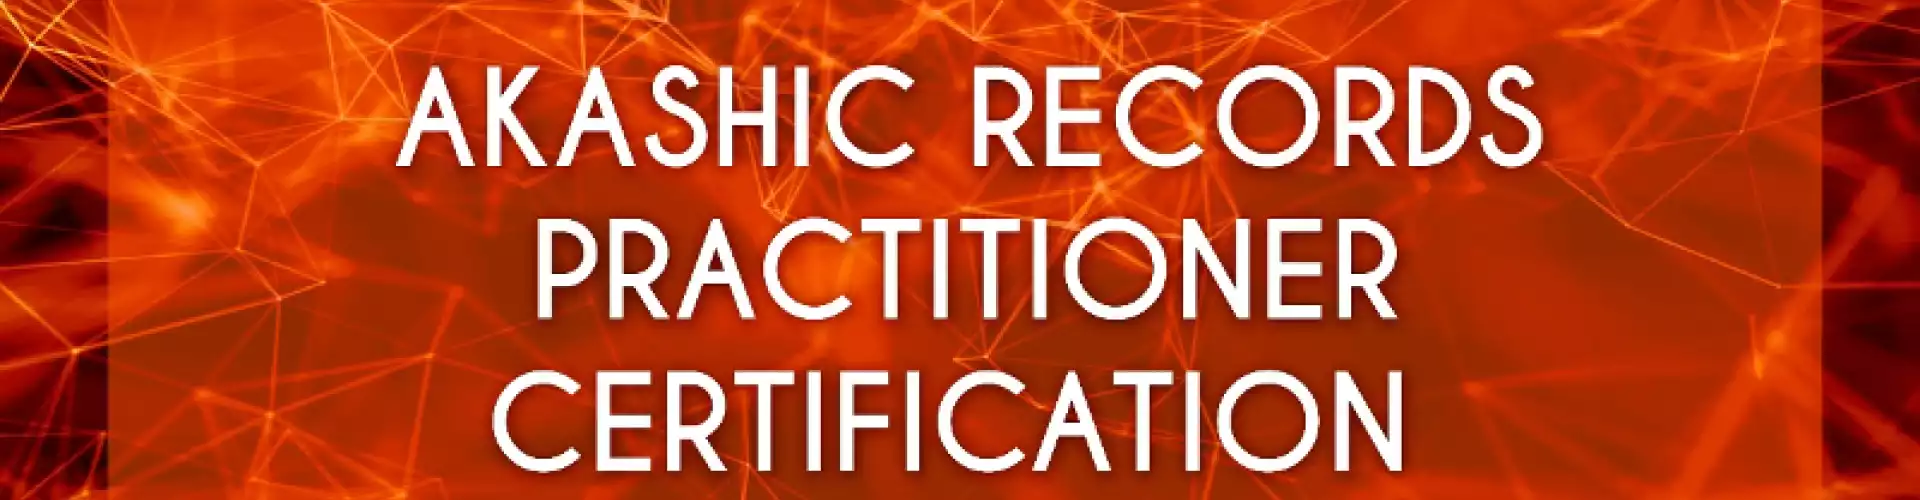 Akashic Records Practitioner Certification - February 26-27, 2021 - Amy Mak